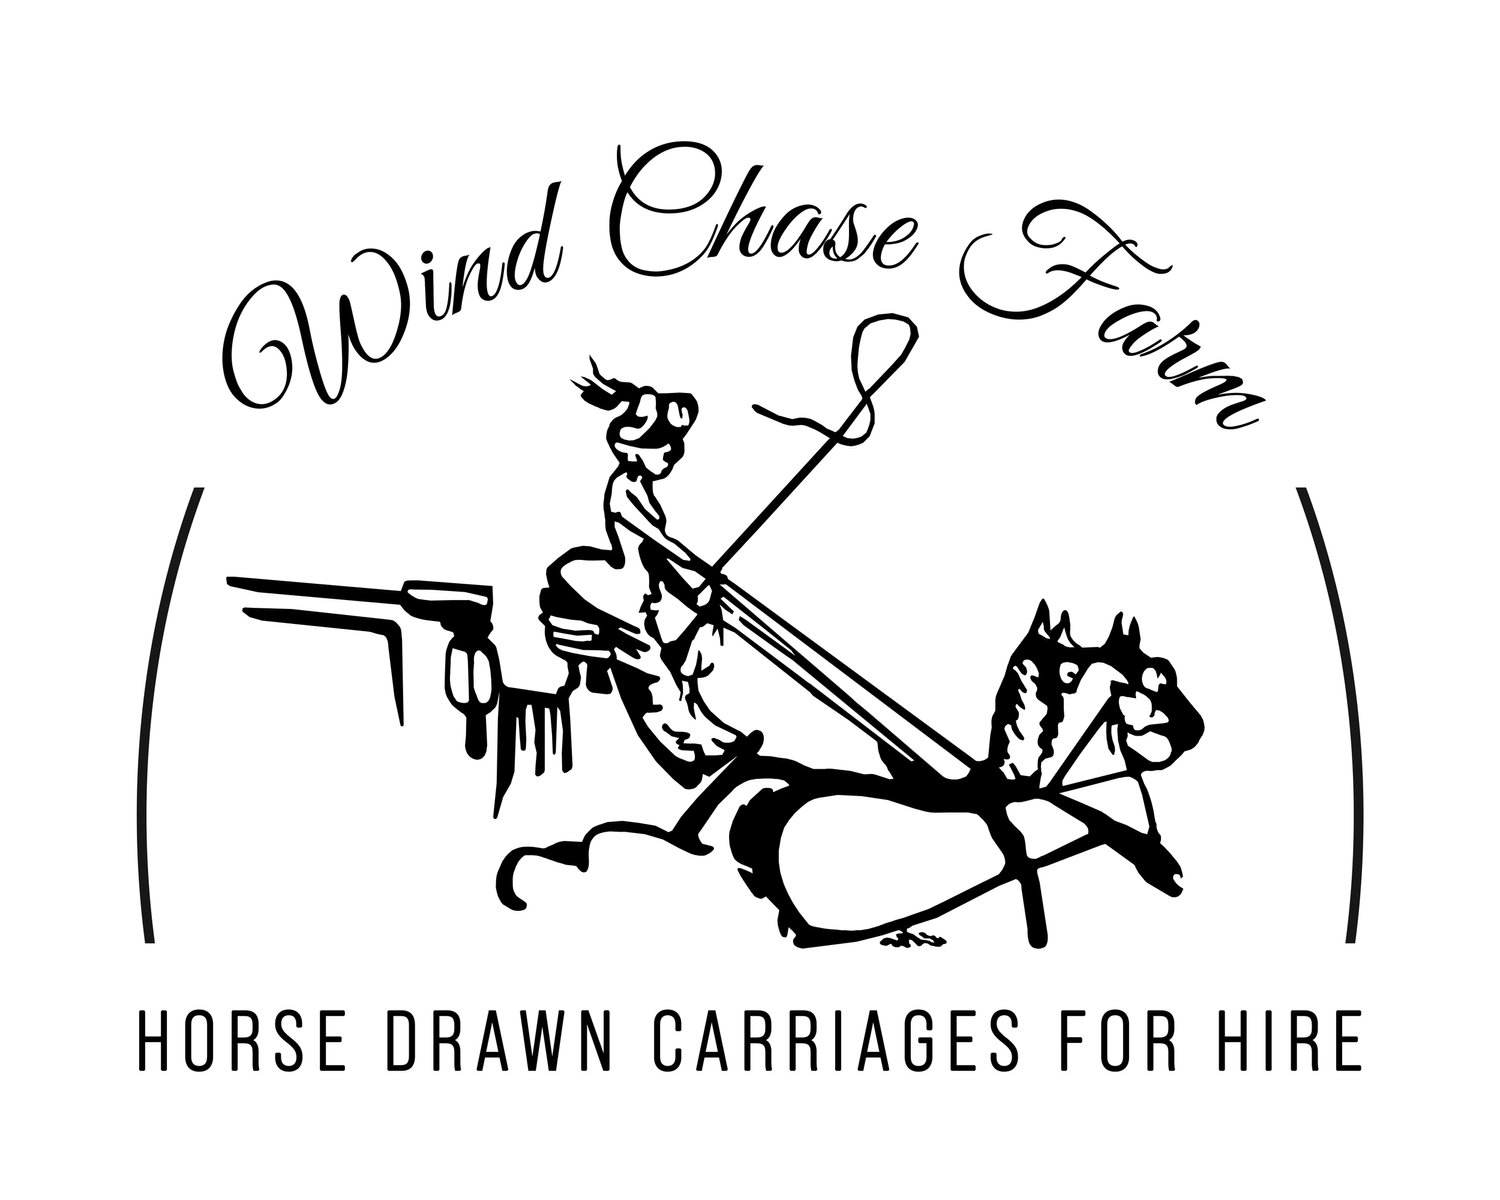 Wind Chase Farm